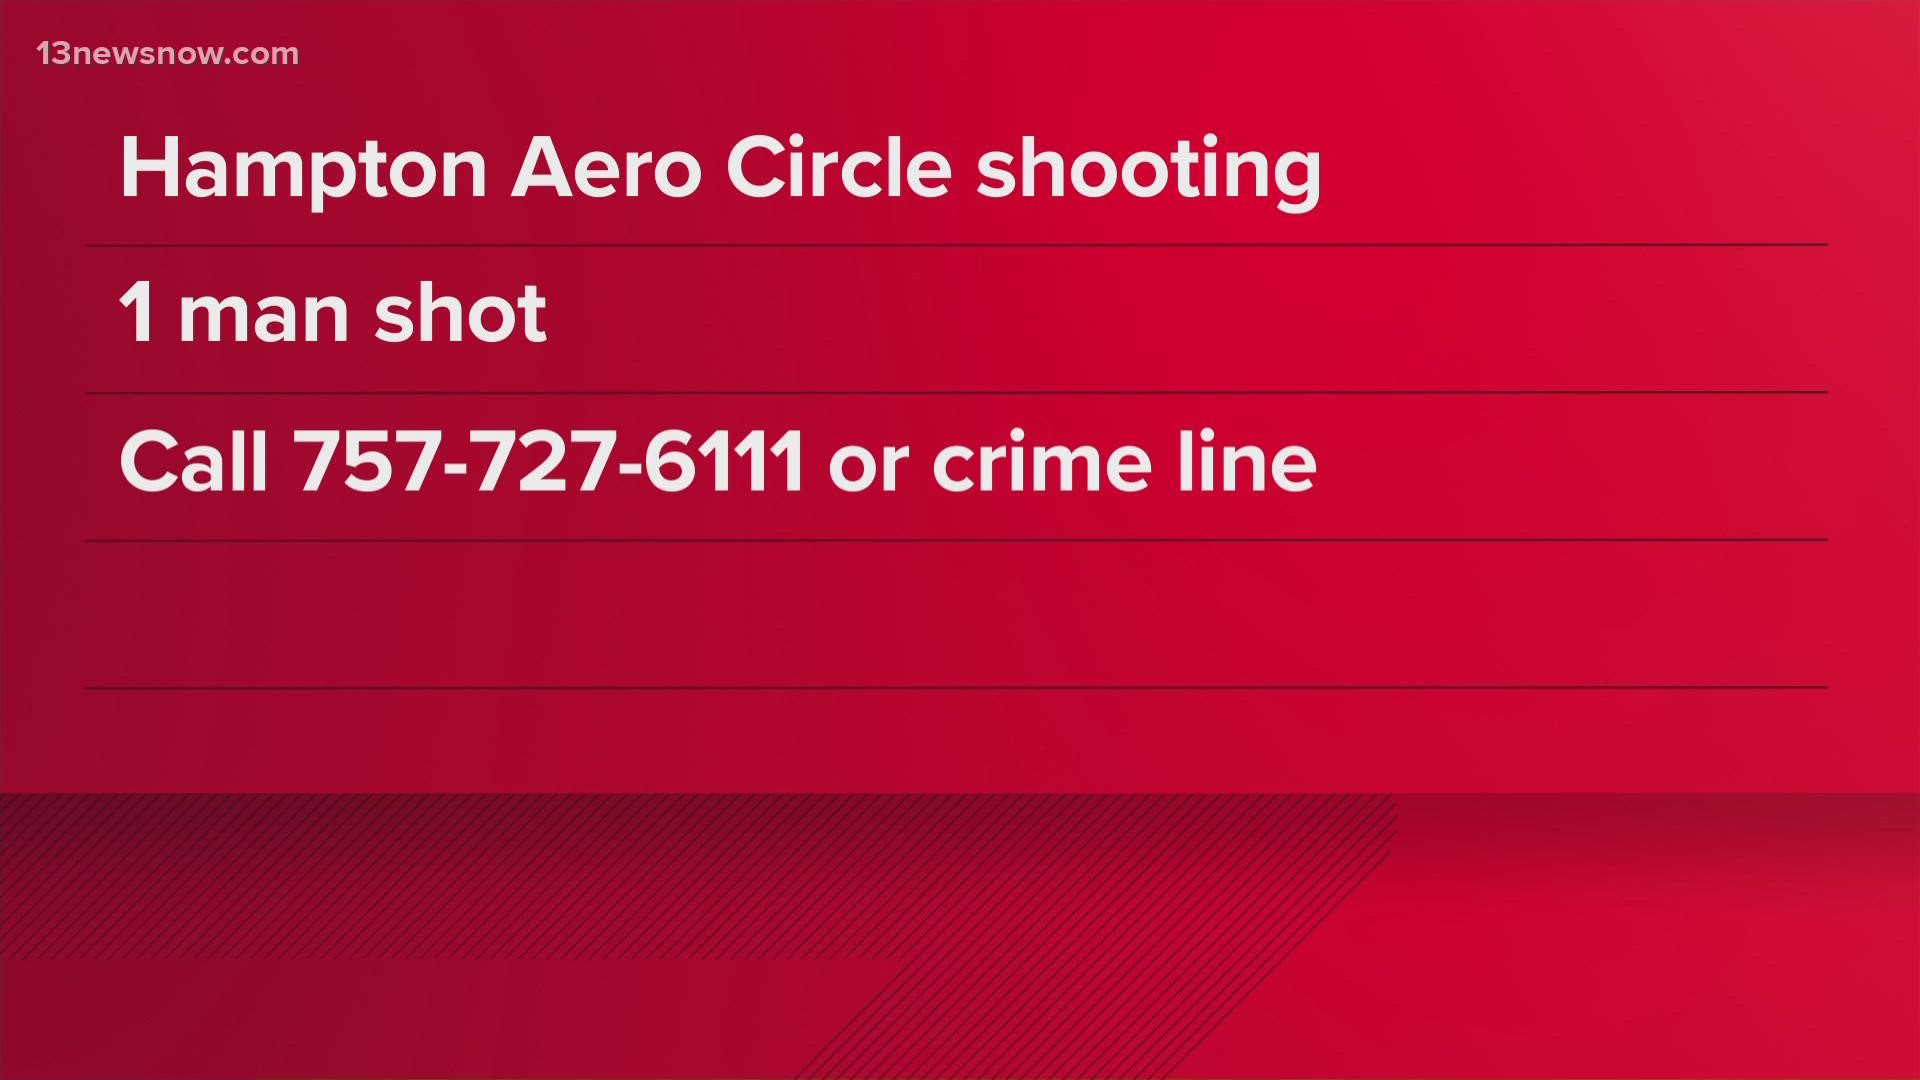 Hampton Police said someone called police Sunday around 3:53p.m. about a shooting victim.